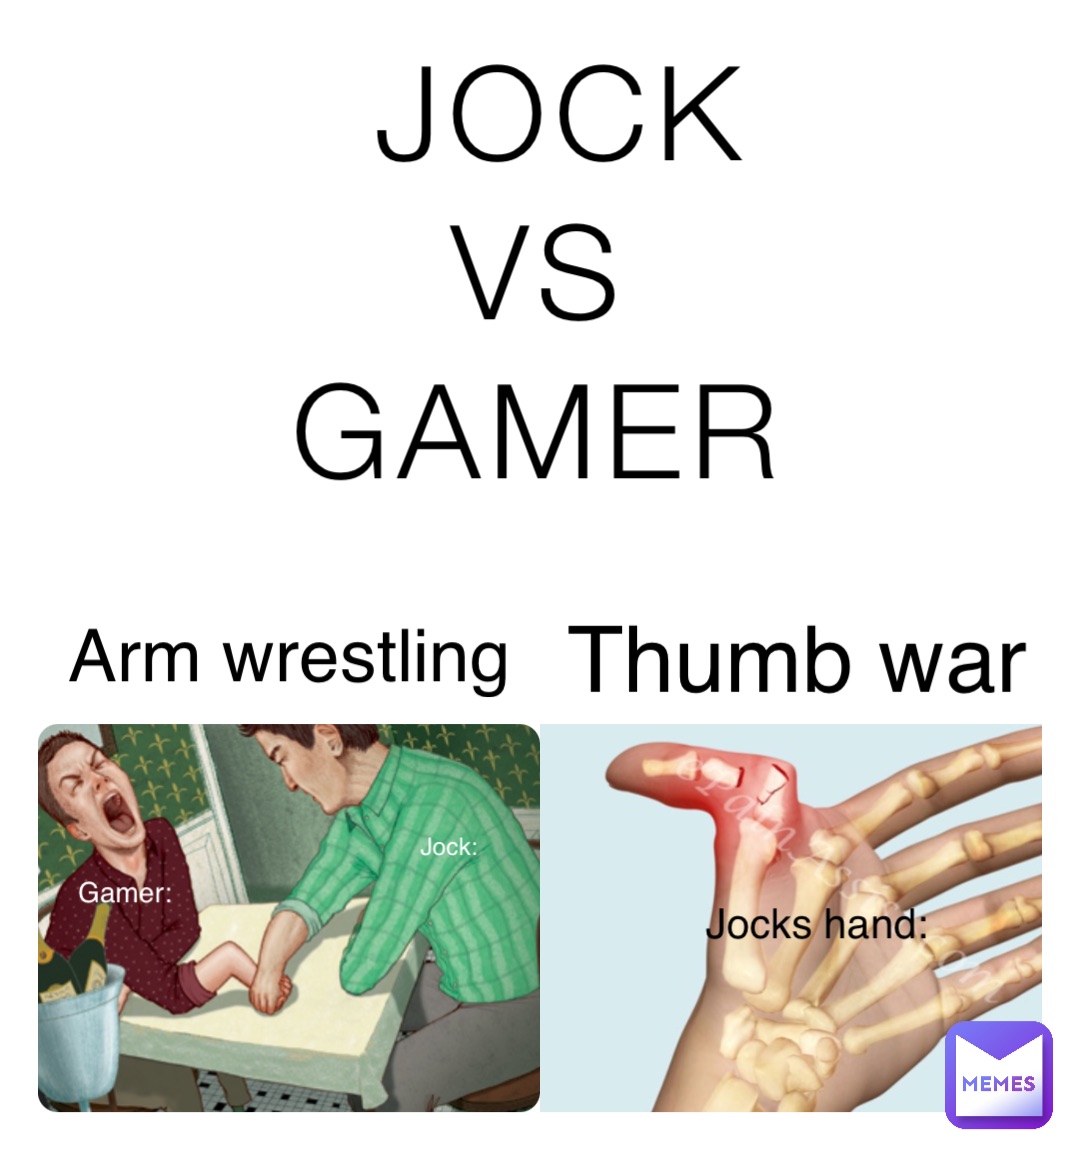 JOCK 
VS
GAMER Arm wrestling Jock: Gamer: Thumb war Jocks hand: